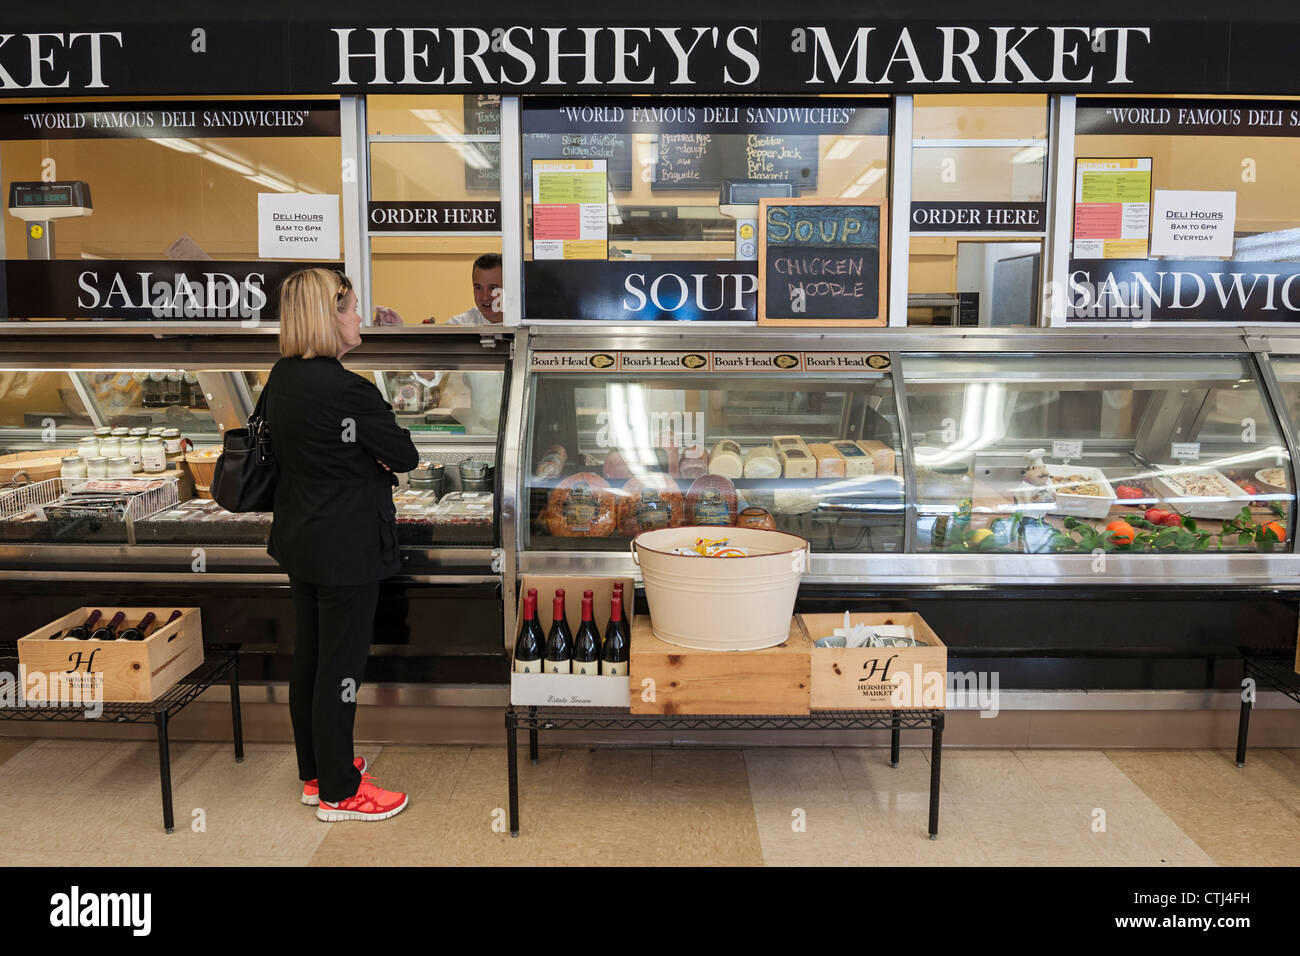 Hersheys Market on Balboa Island in Newport Beach. Stock Photo